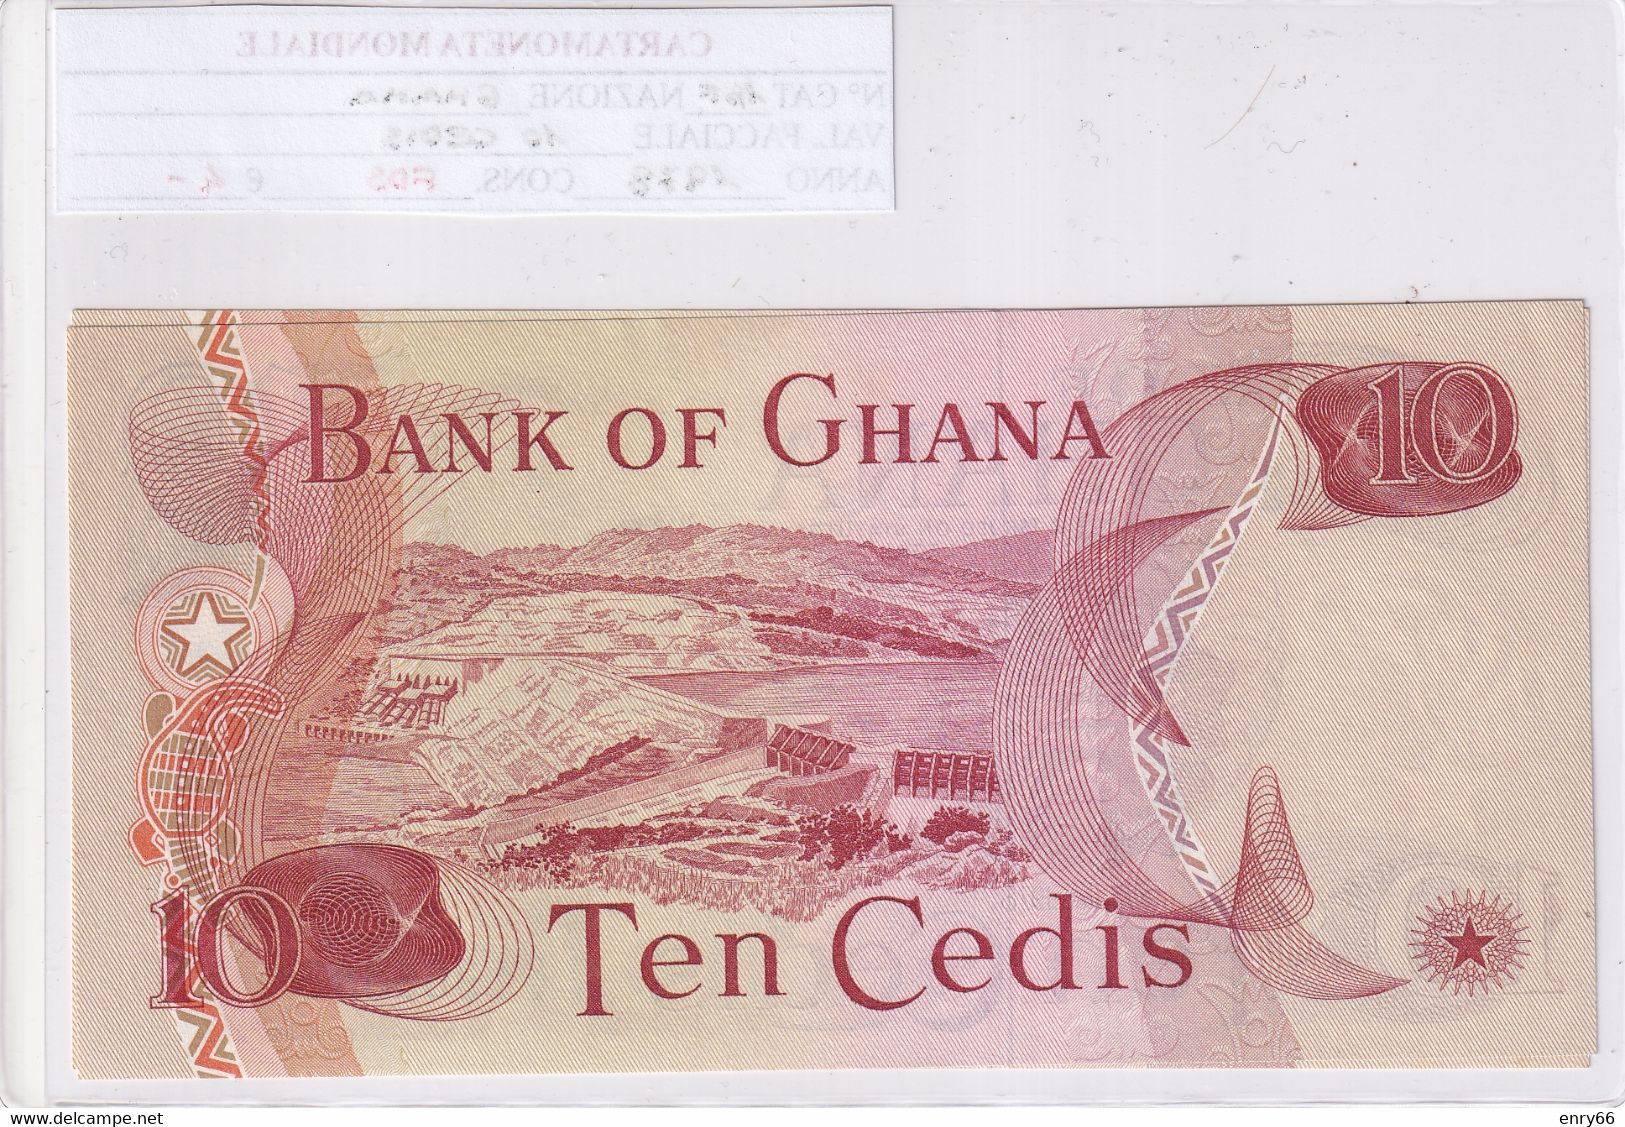 GHANA 1978 10 CEDIS P16F - Ghana